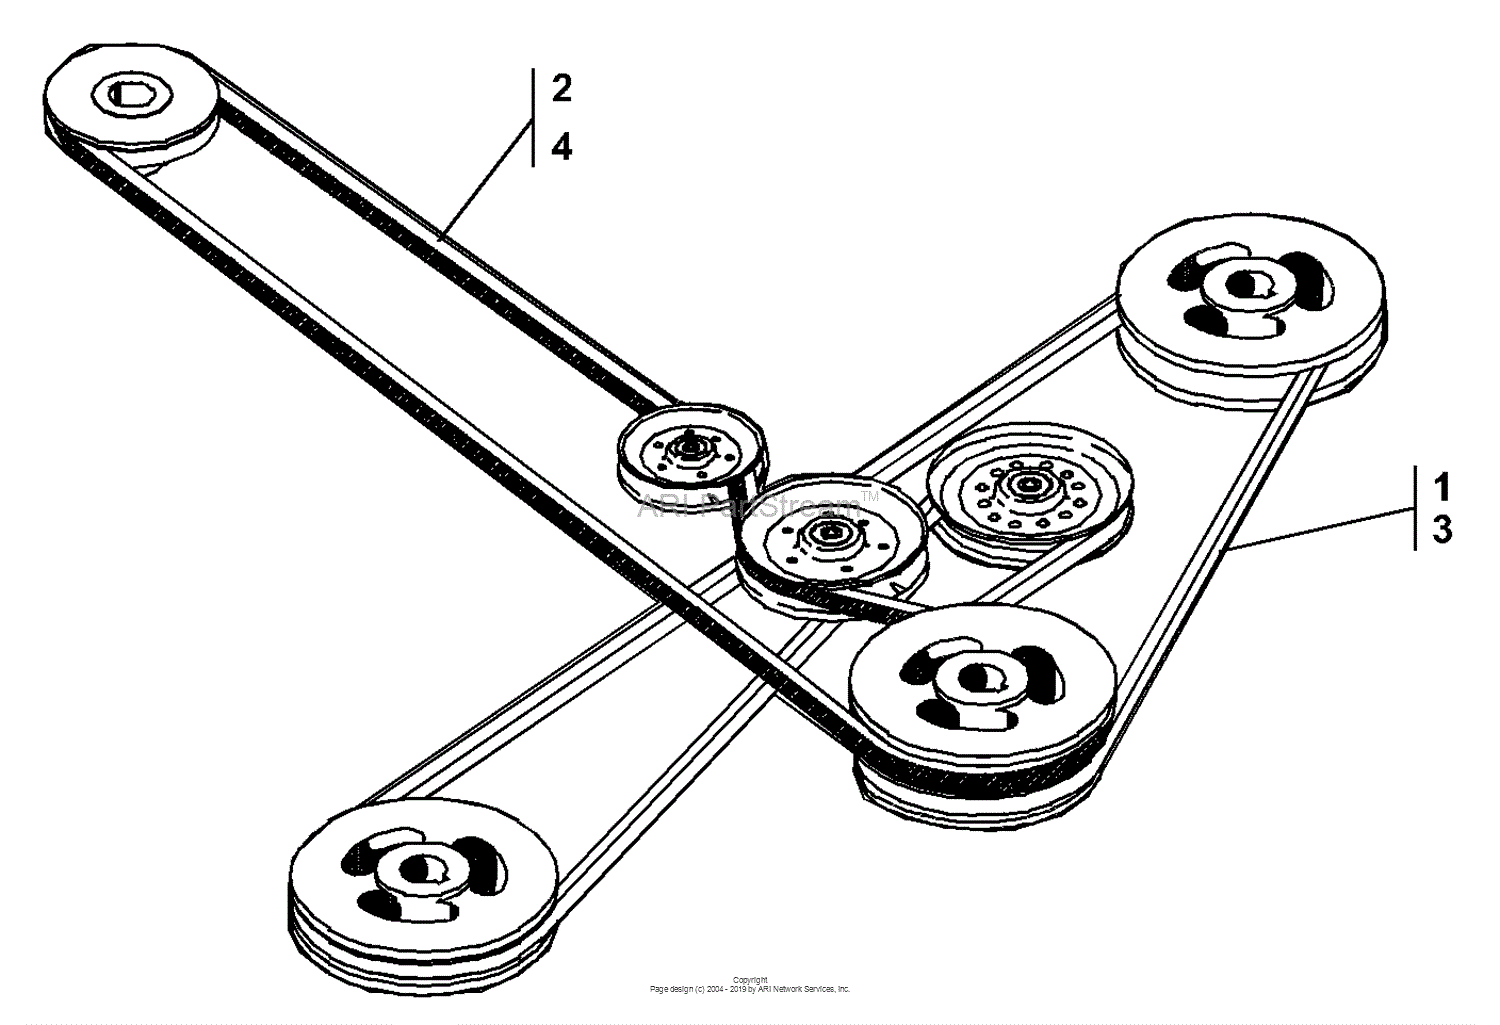 dixie chopper belts diagram